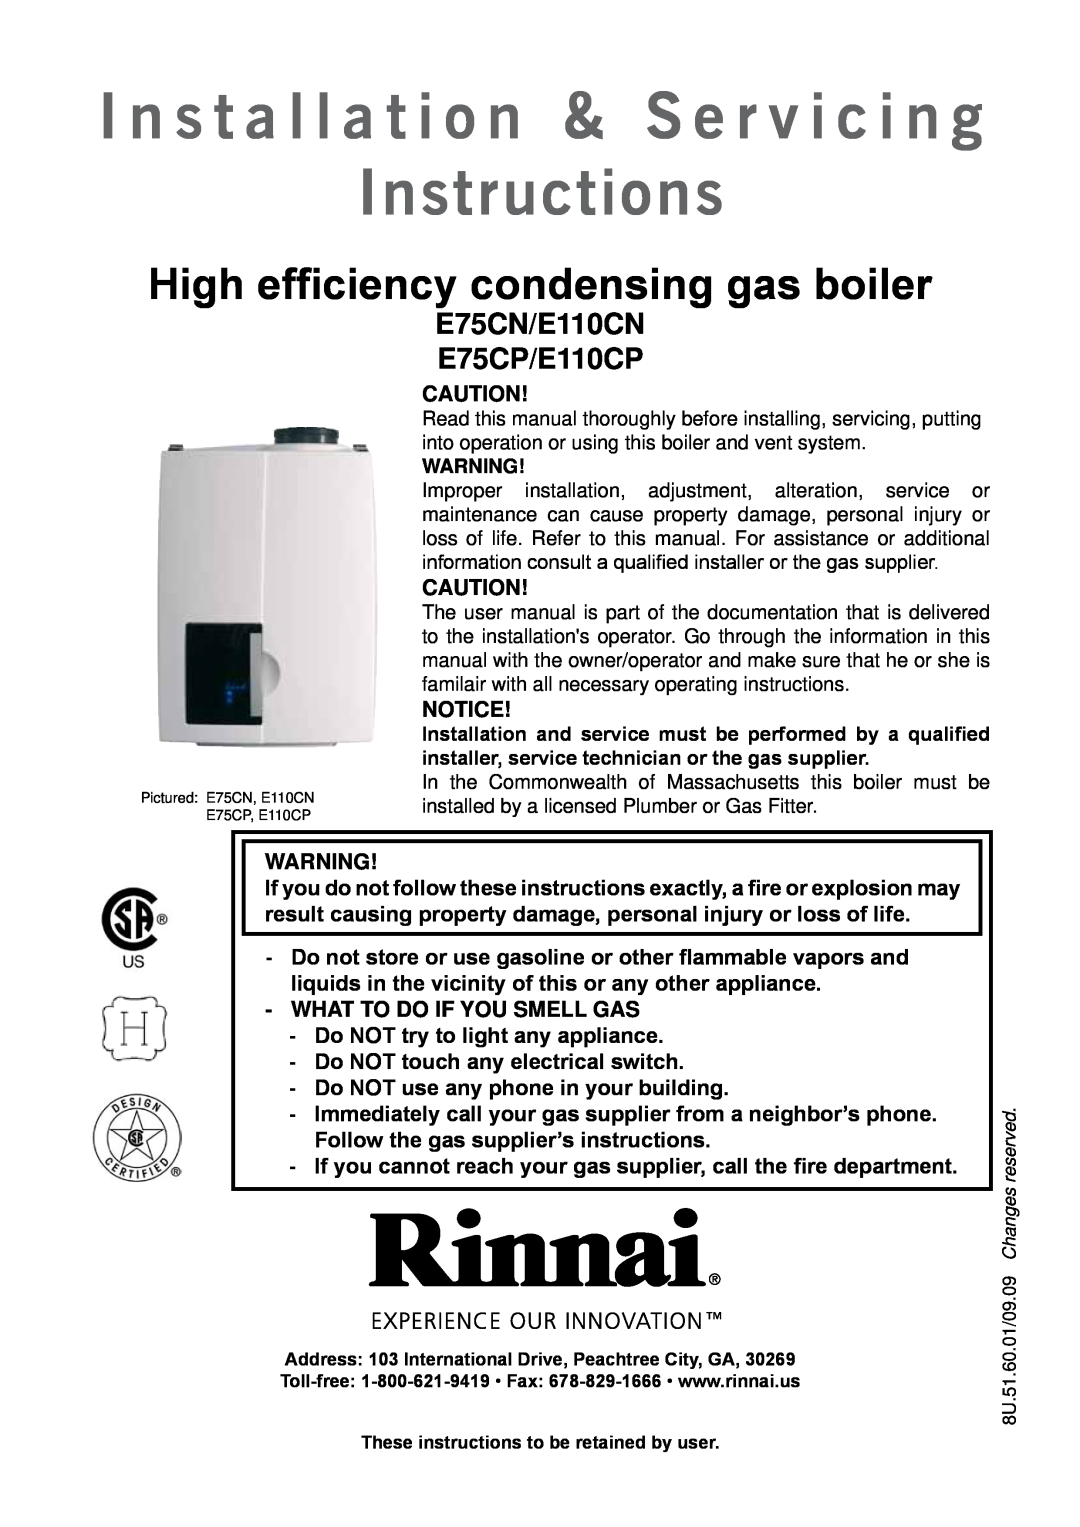 Rinnai E75CN user manual Instructions, I n s t a l l a t i o n & S e r v i c i n g, High efficiency condensing gas boiler 